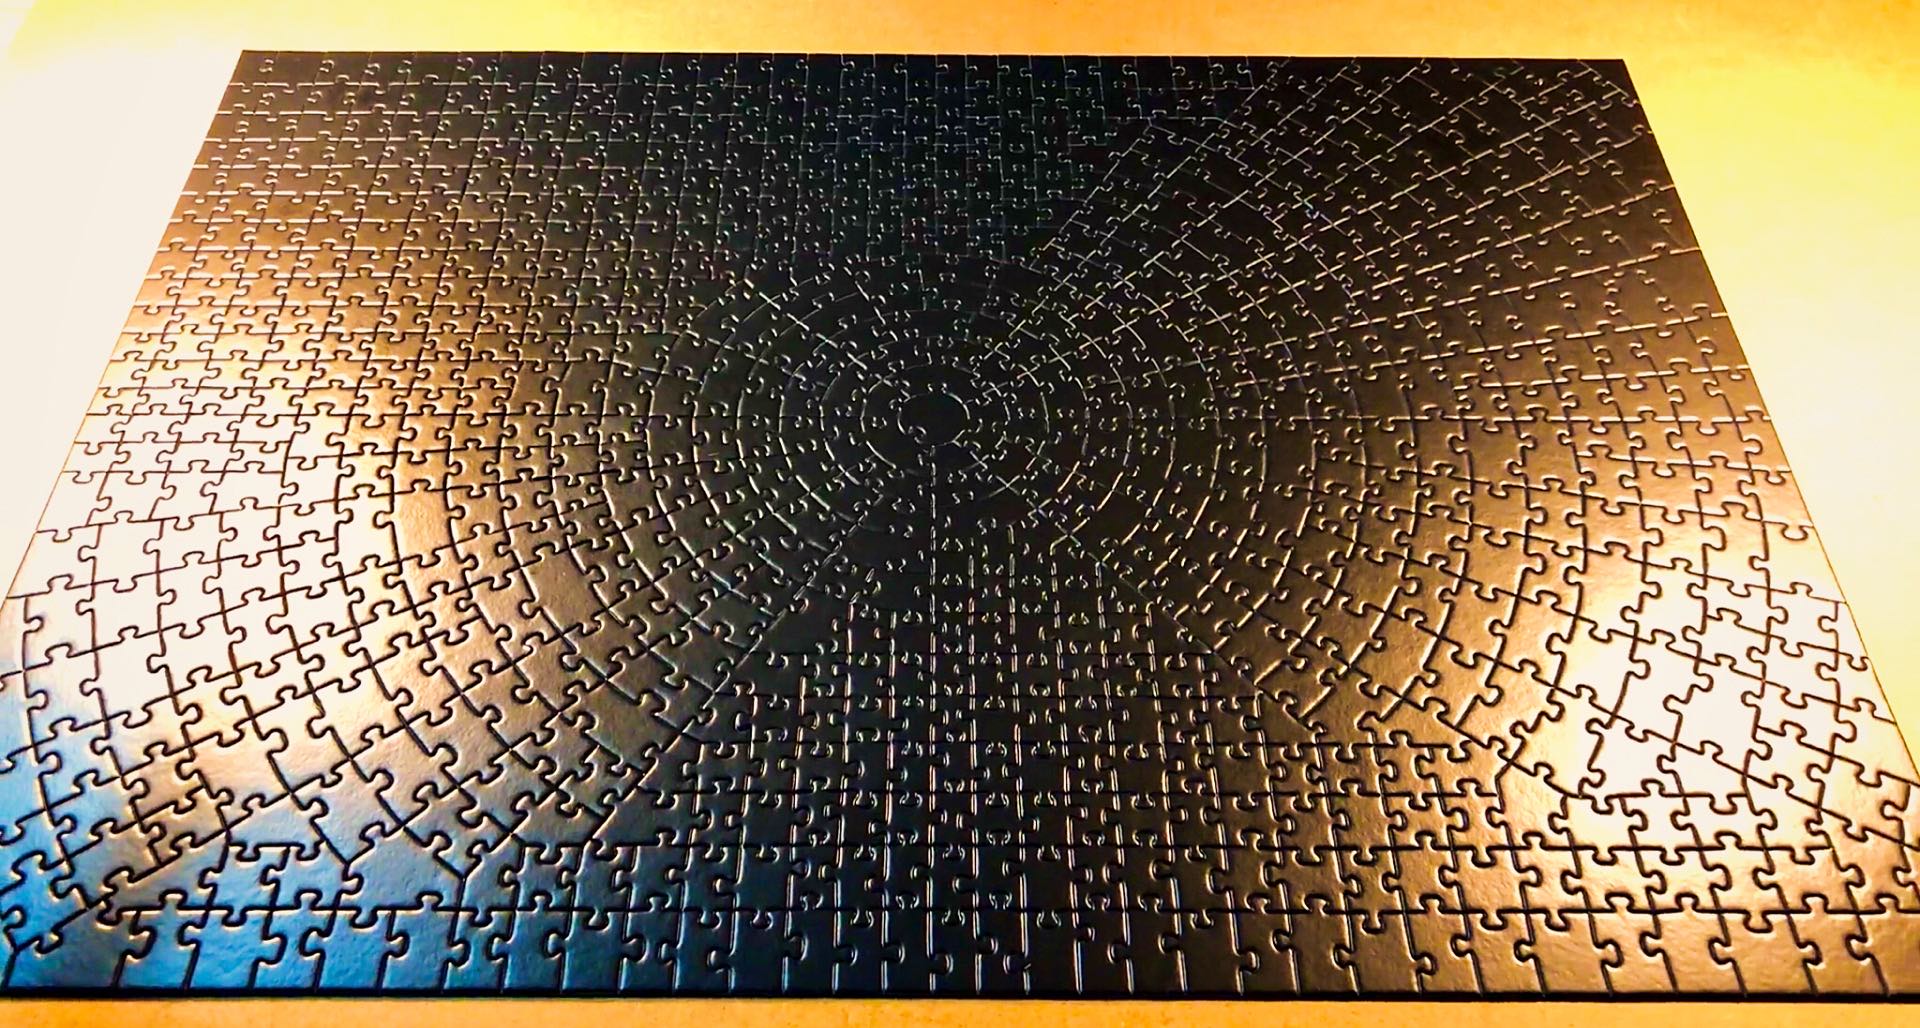 Ravensburger solid black “Krypt” puzzle. ($20)Photo via u/nastyimmigrant (Reddit)